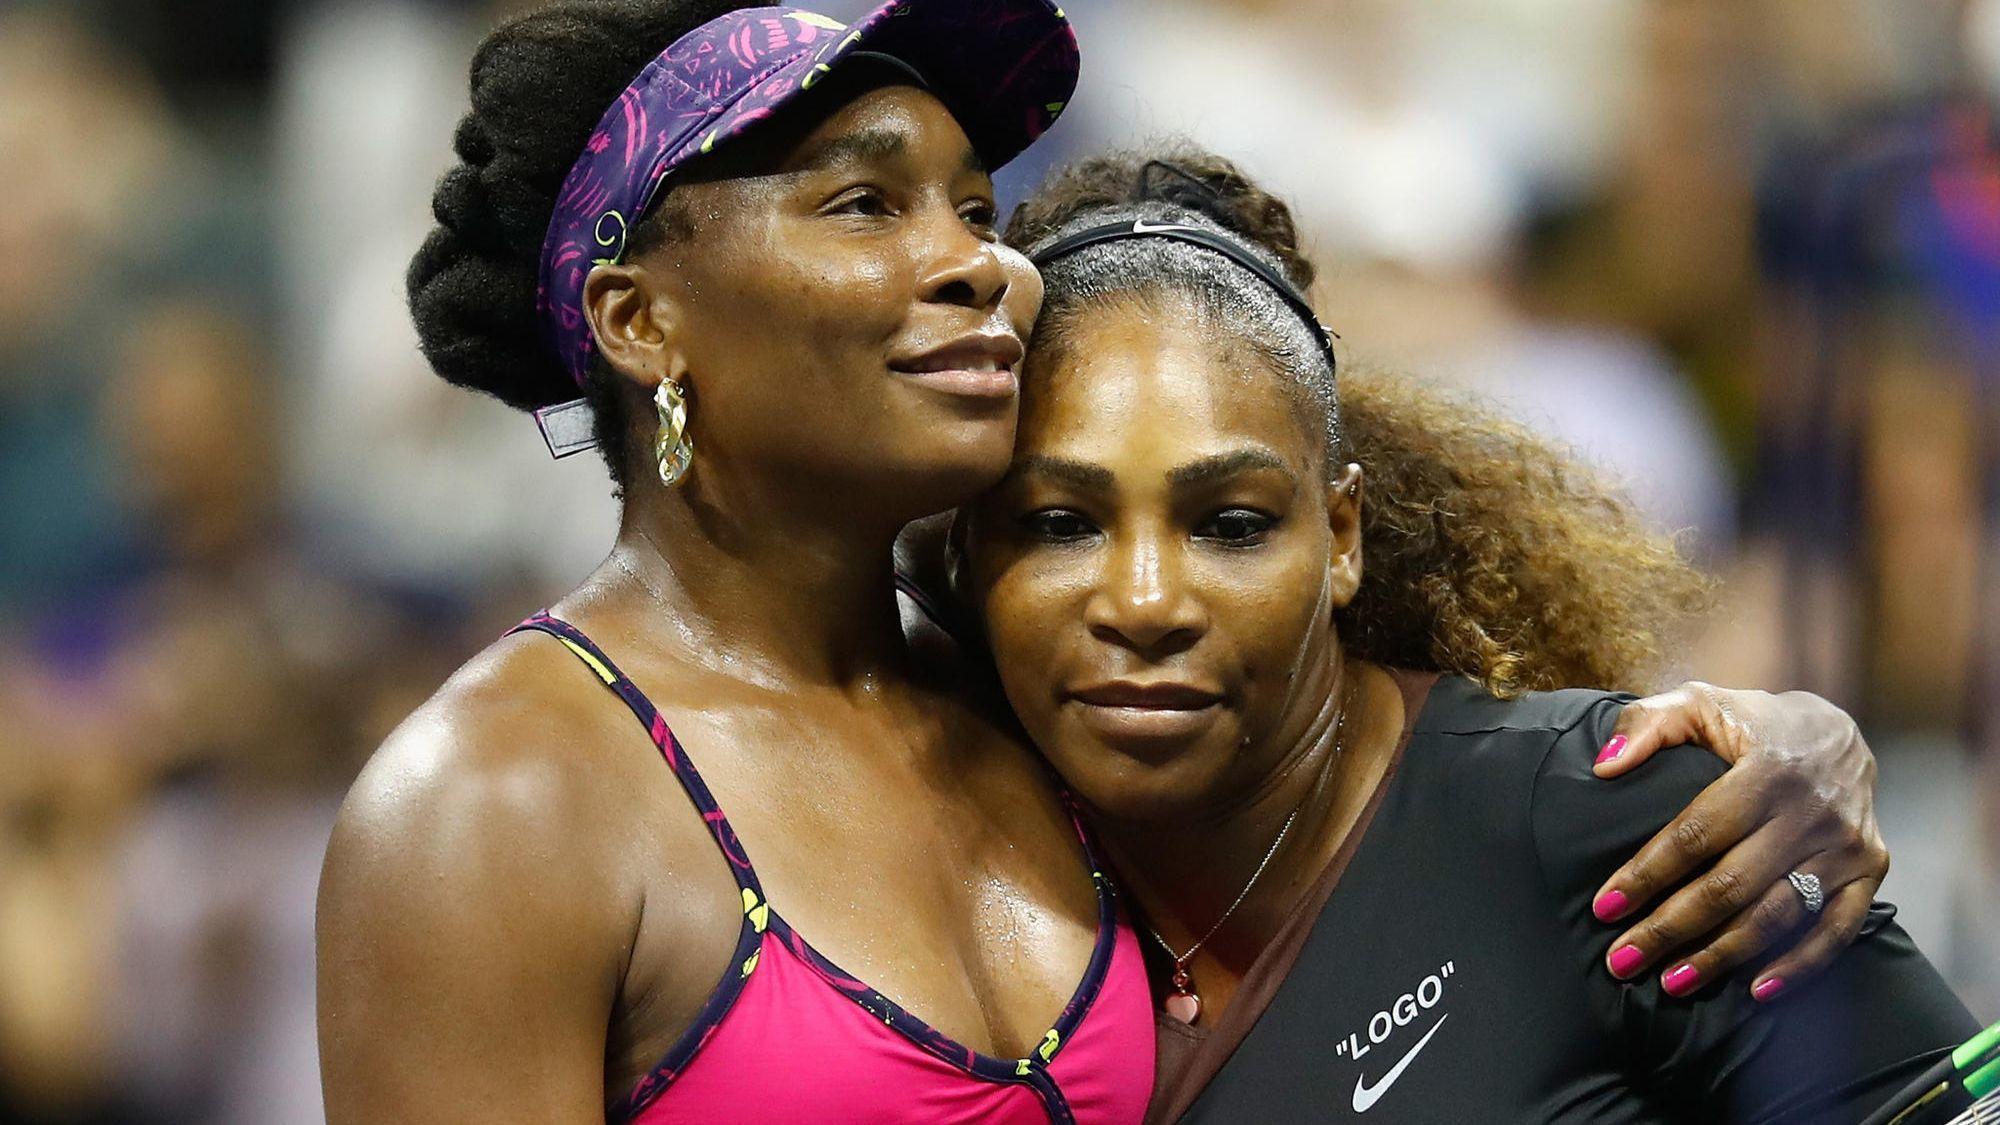 Venus and Serena Williams help inspire diversity in tennis - Chicago Tribune